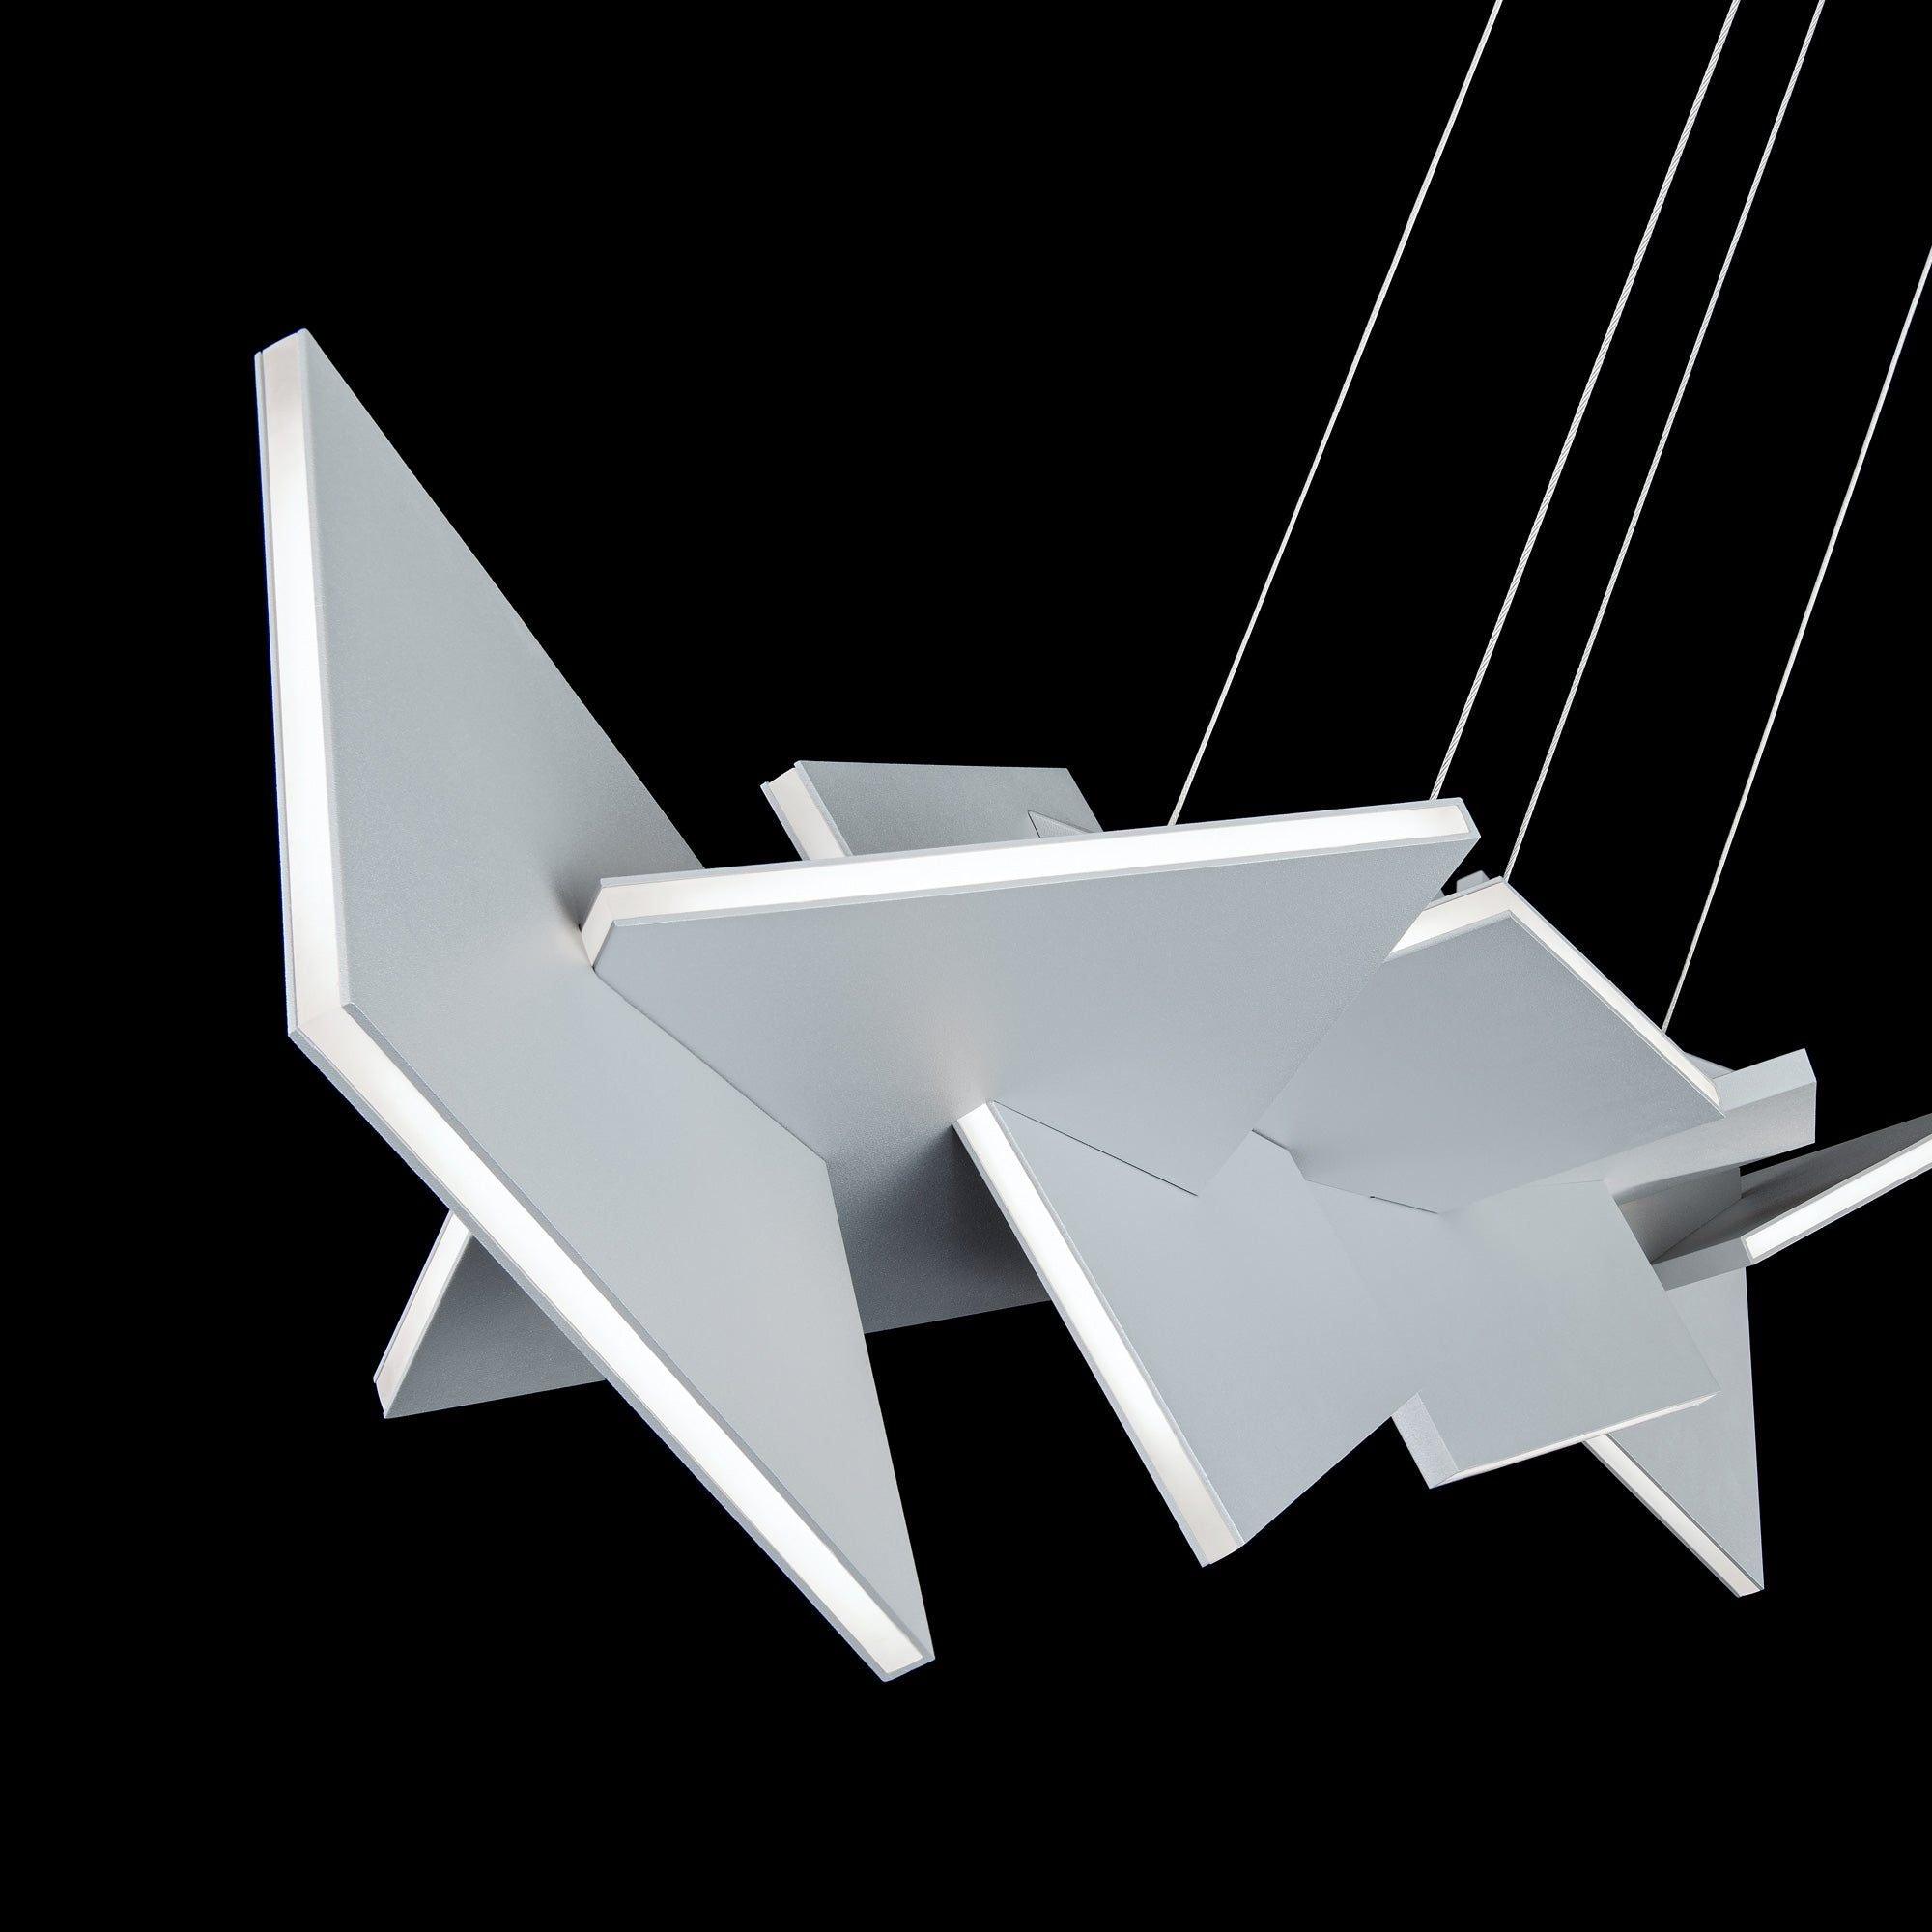 Modern Forms - Konstrukt 48" LED Linear Chandelier - Lights Canada